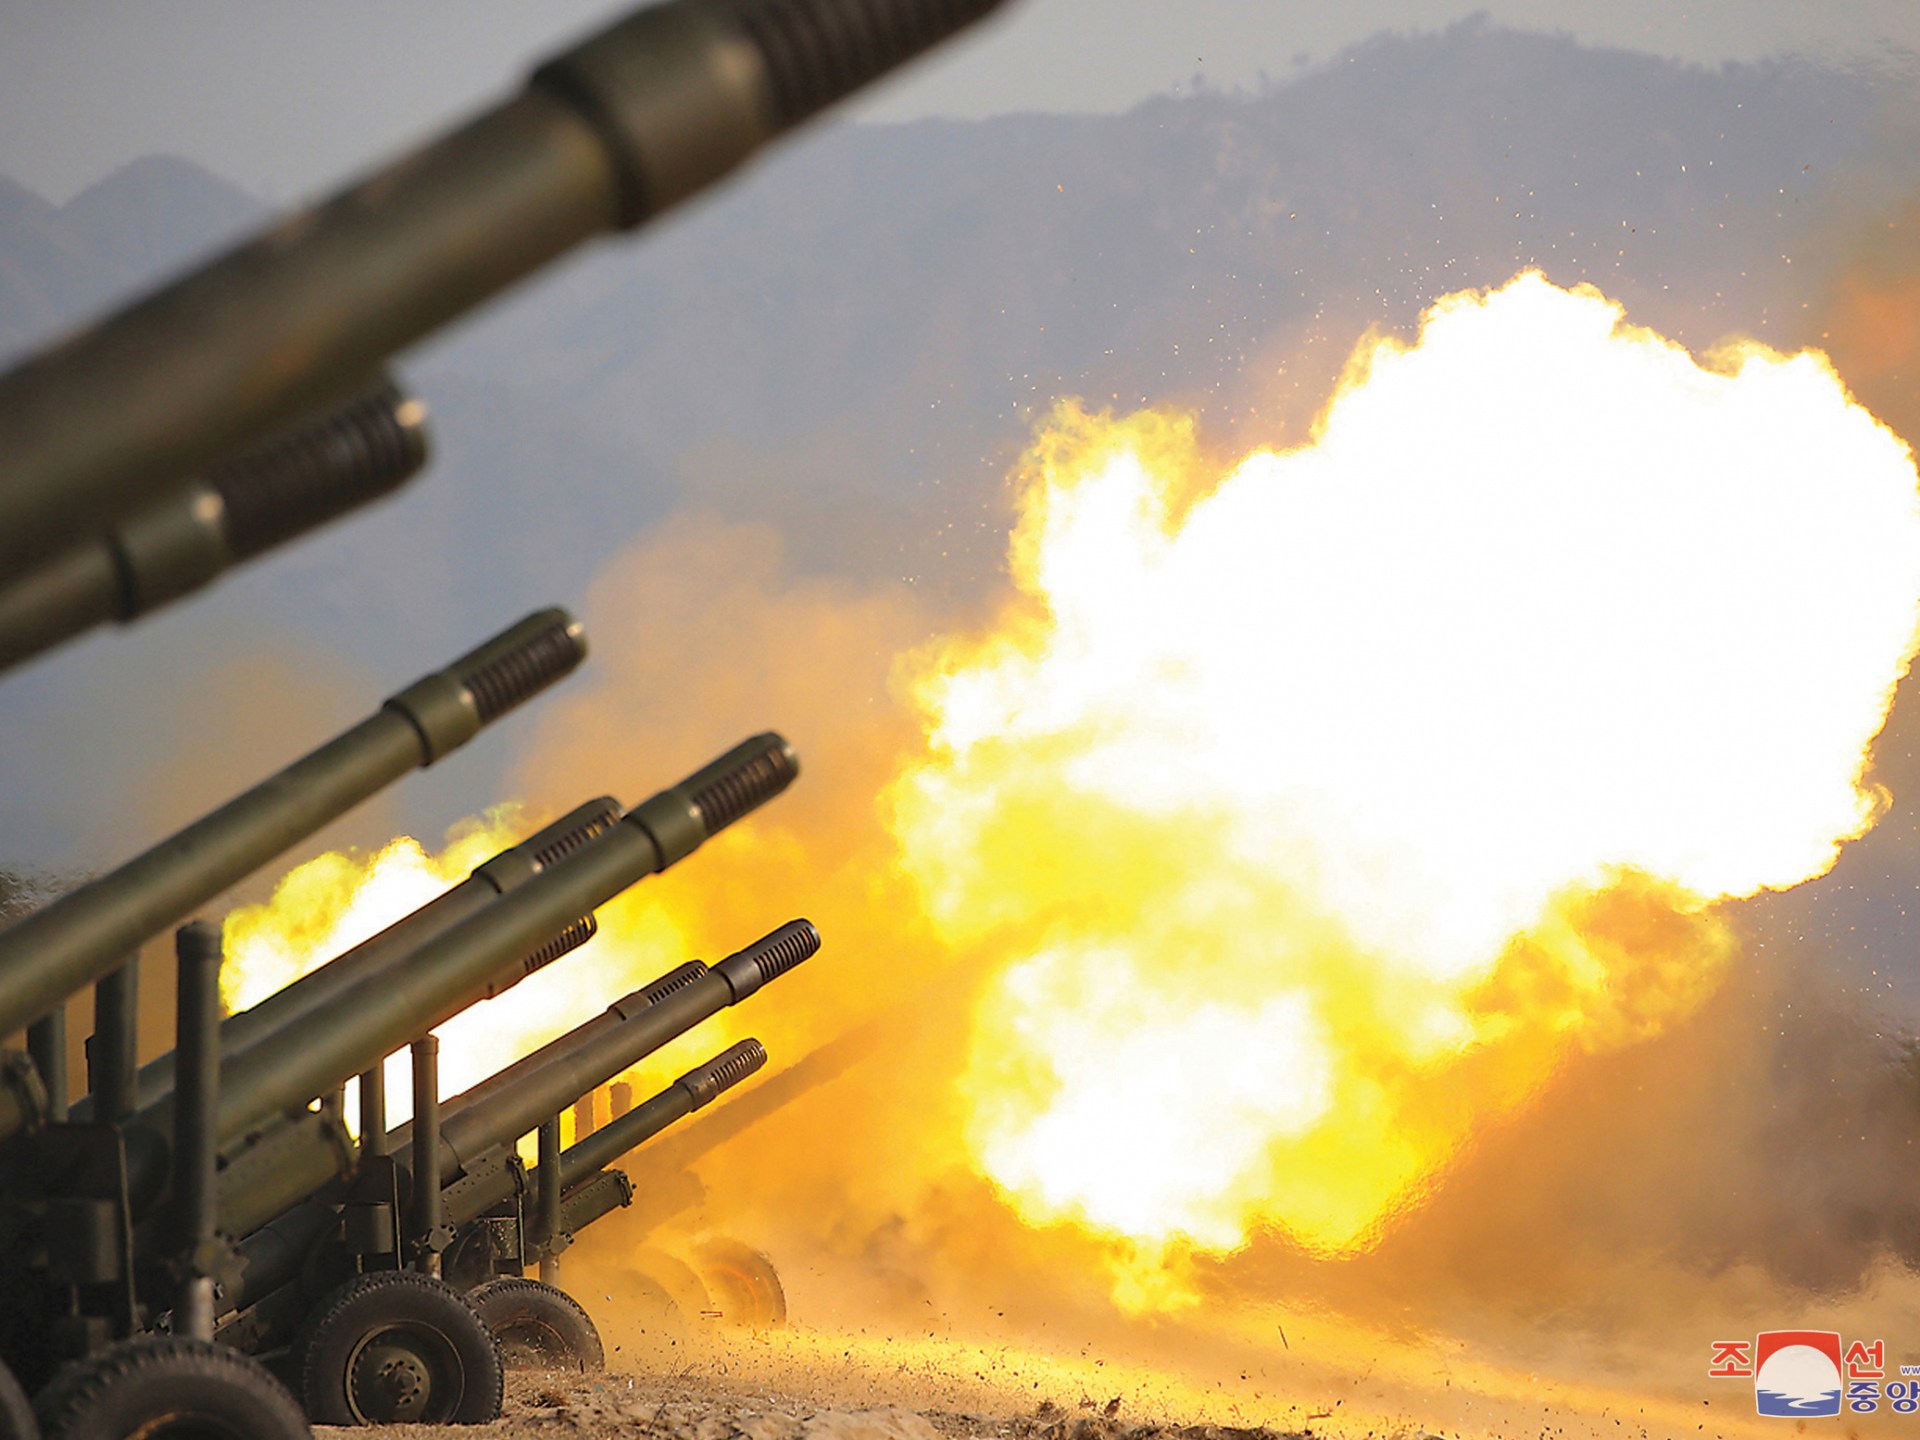 russia-to-buy-north-korean-artillery-shells-rockets-report